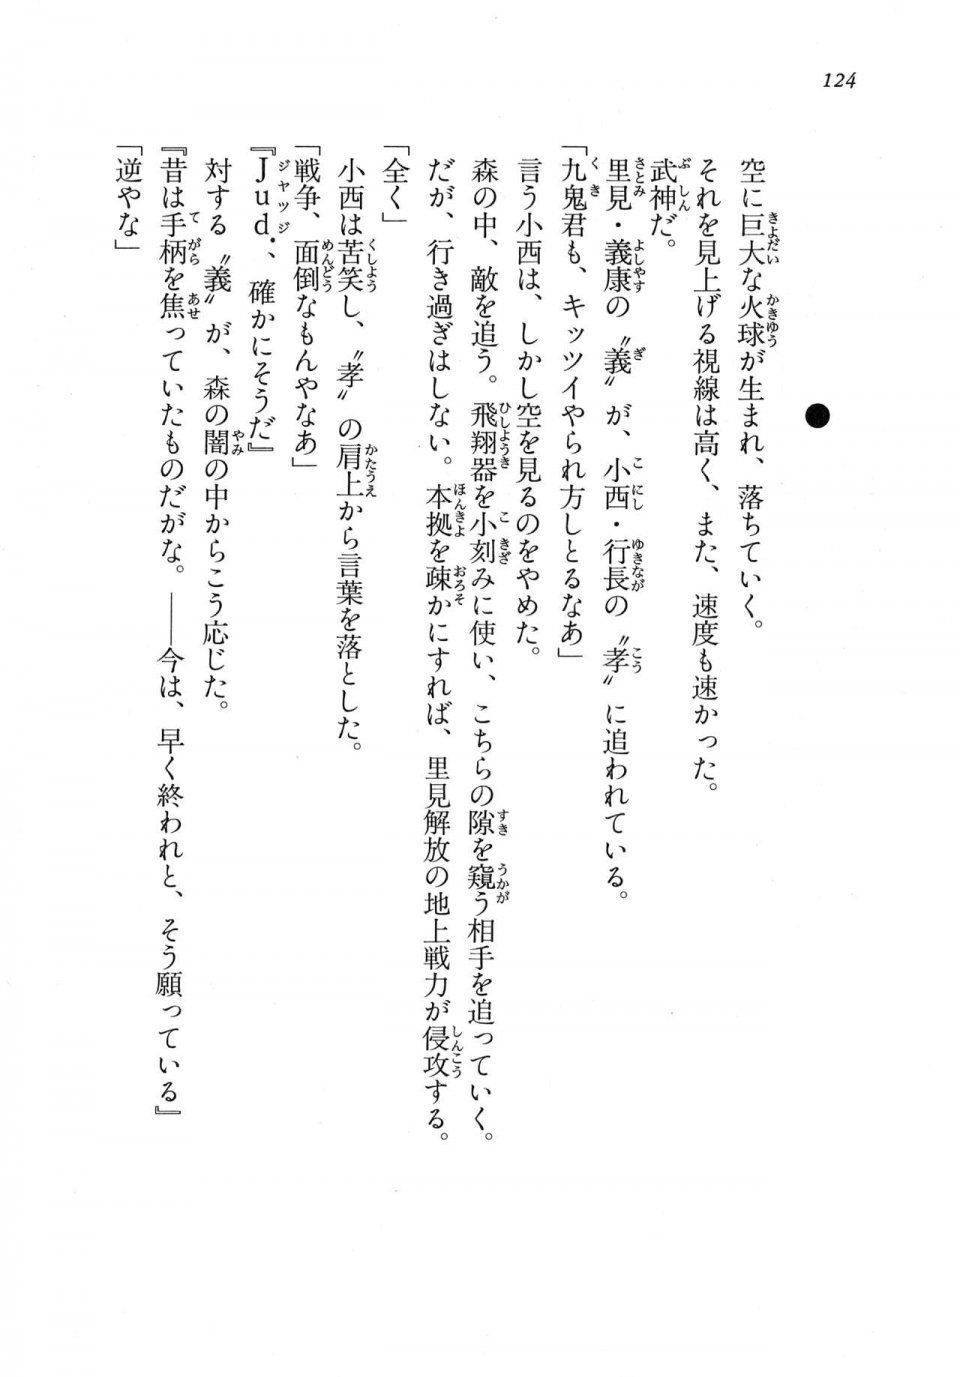 Kyoukai Senjou no Horizon LN Vol 18(7C) Part 1 - Photo #124